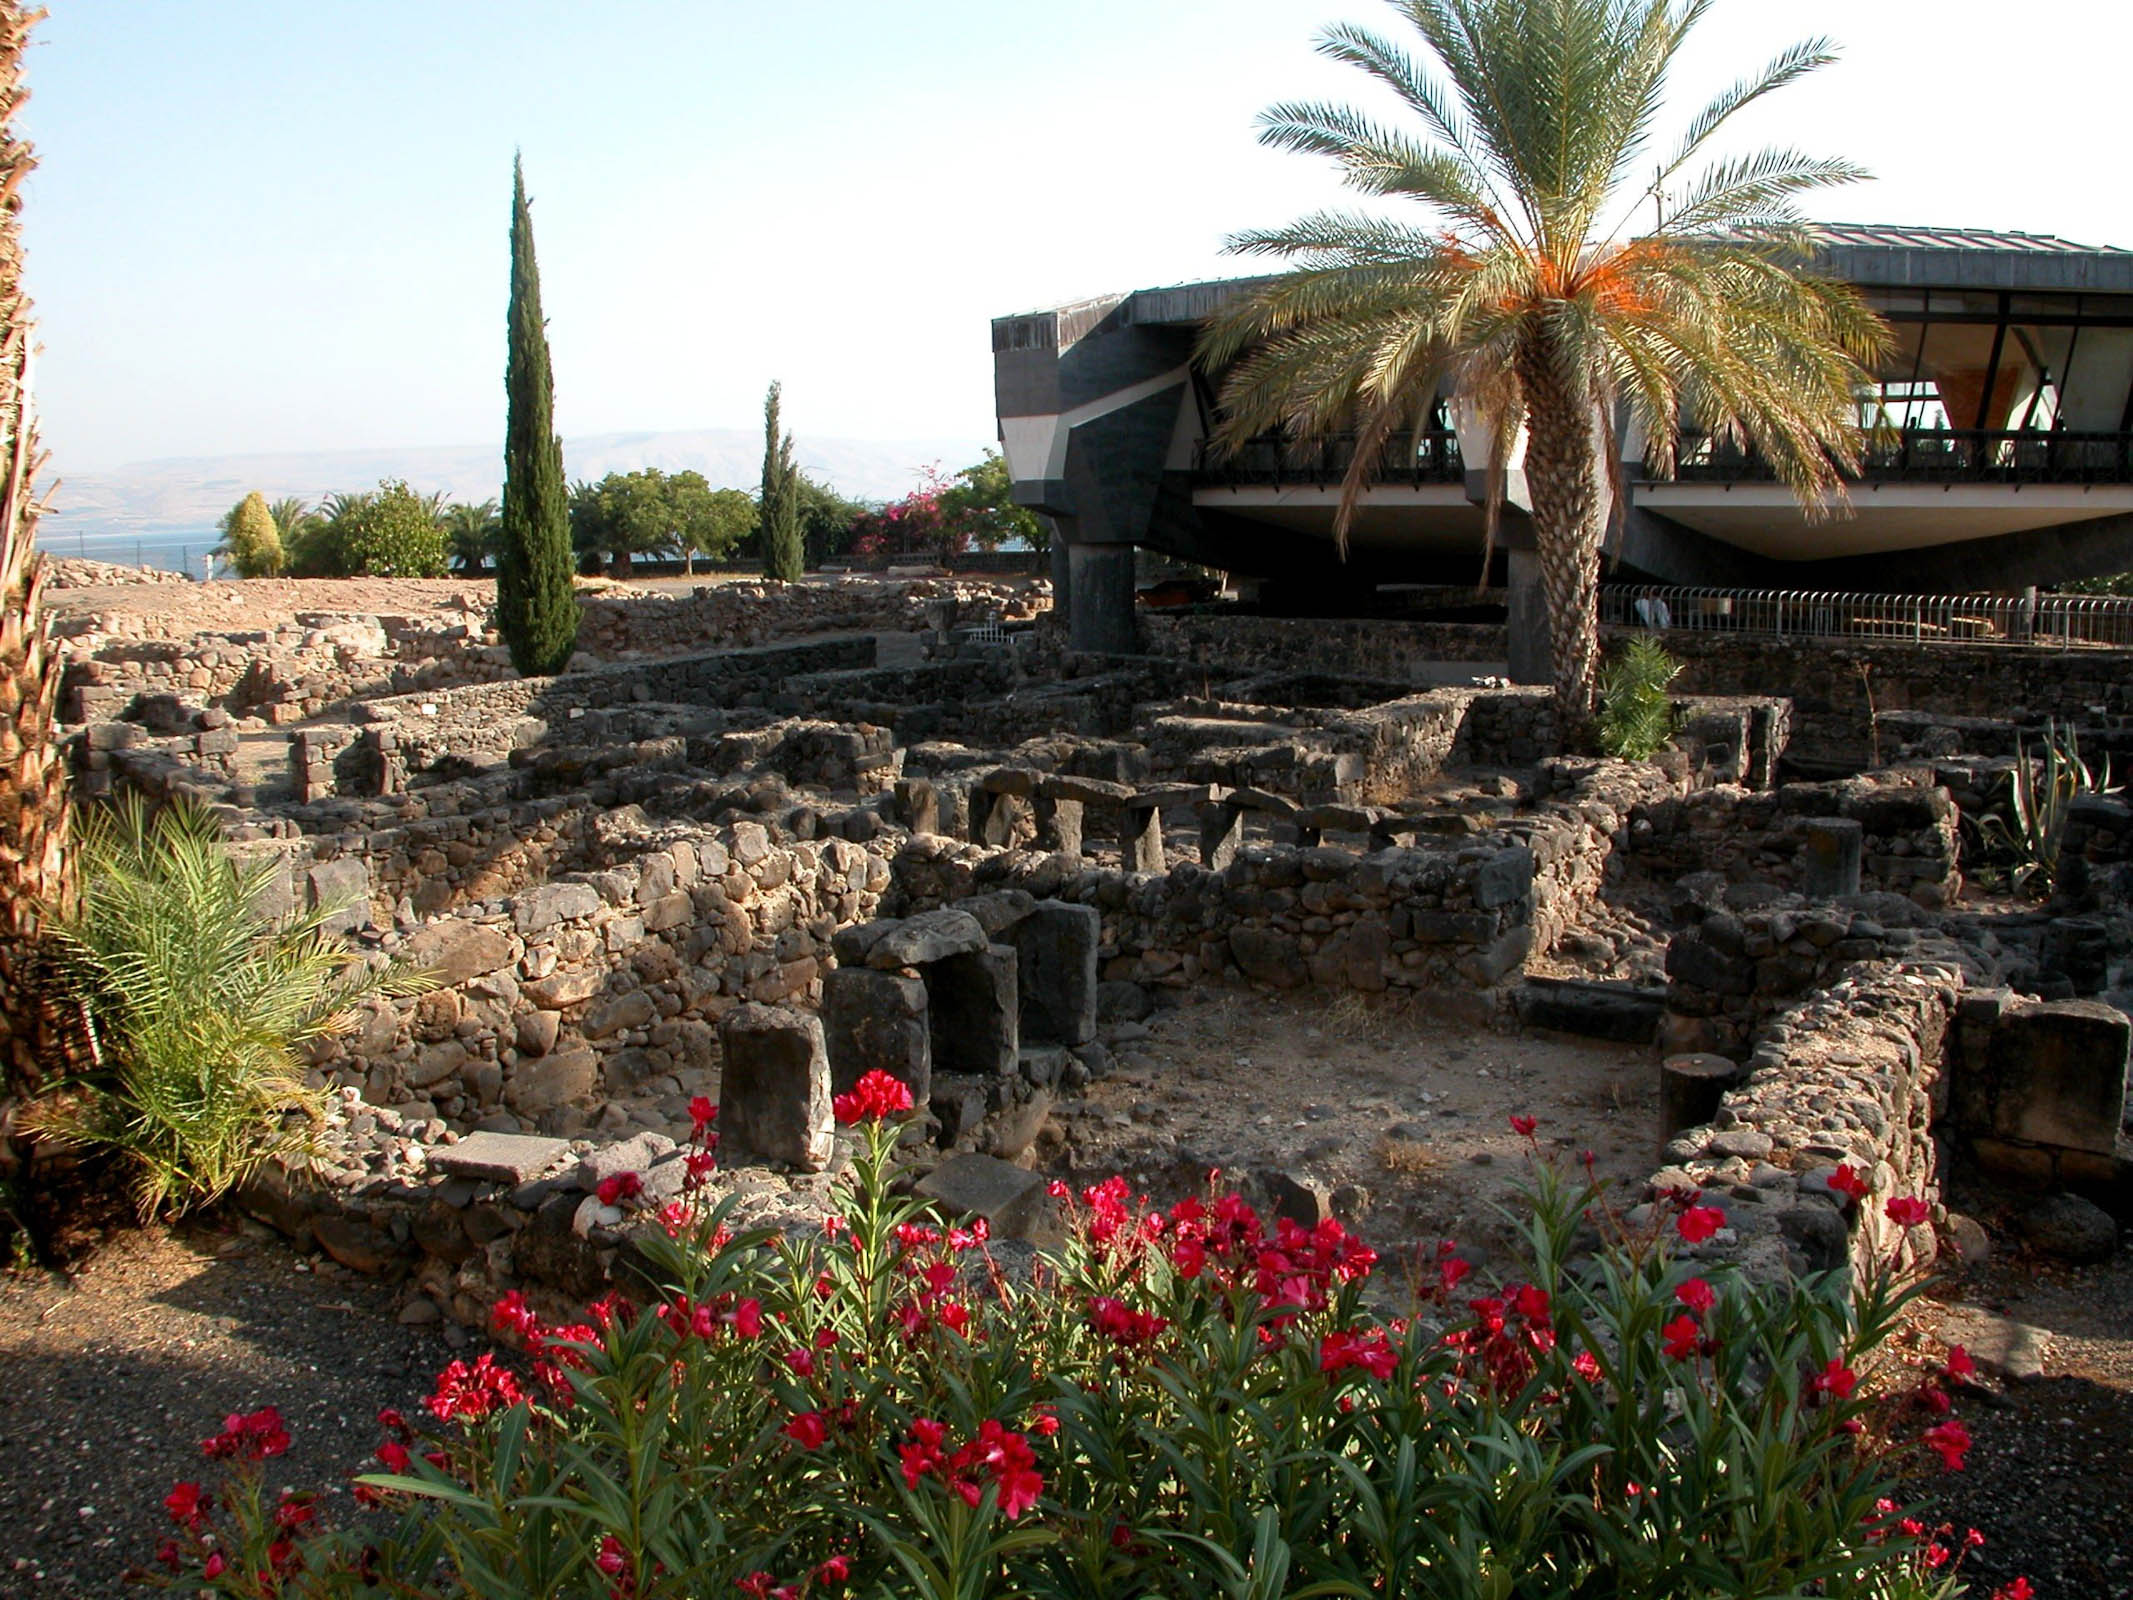 Capernaum basalt houses with Peter's house, tb102702002.jpg